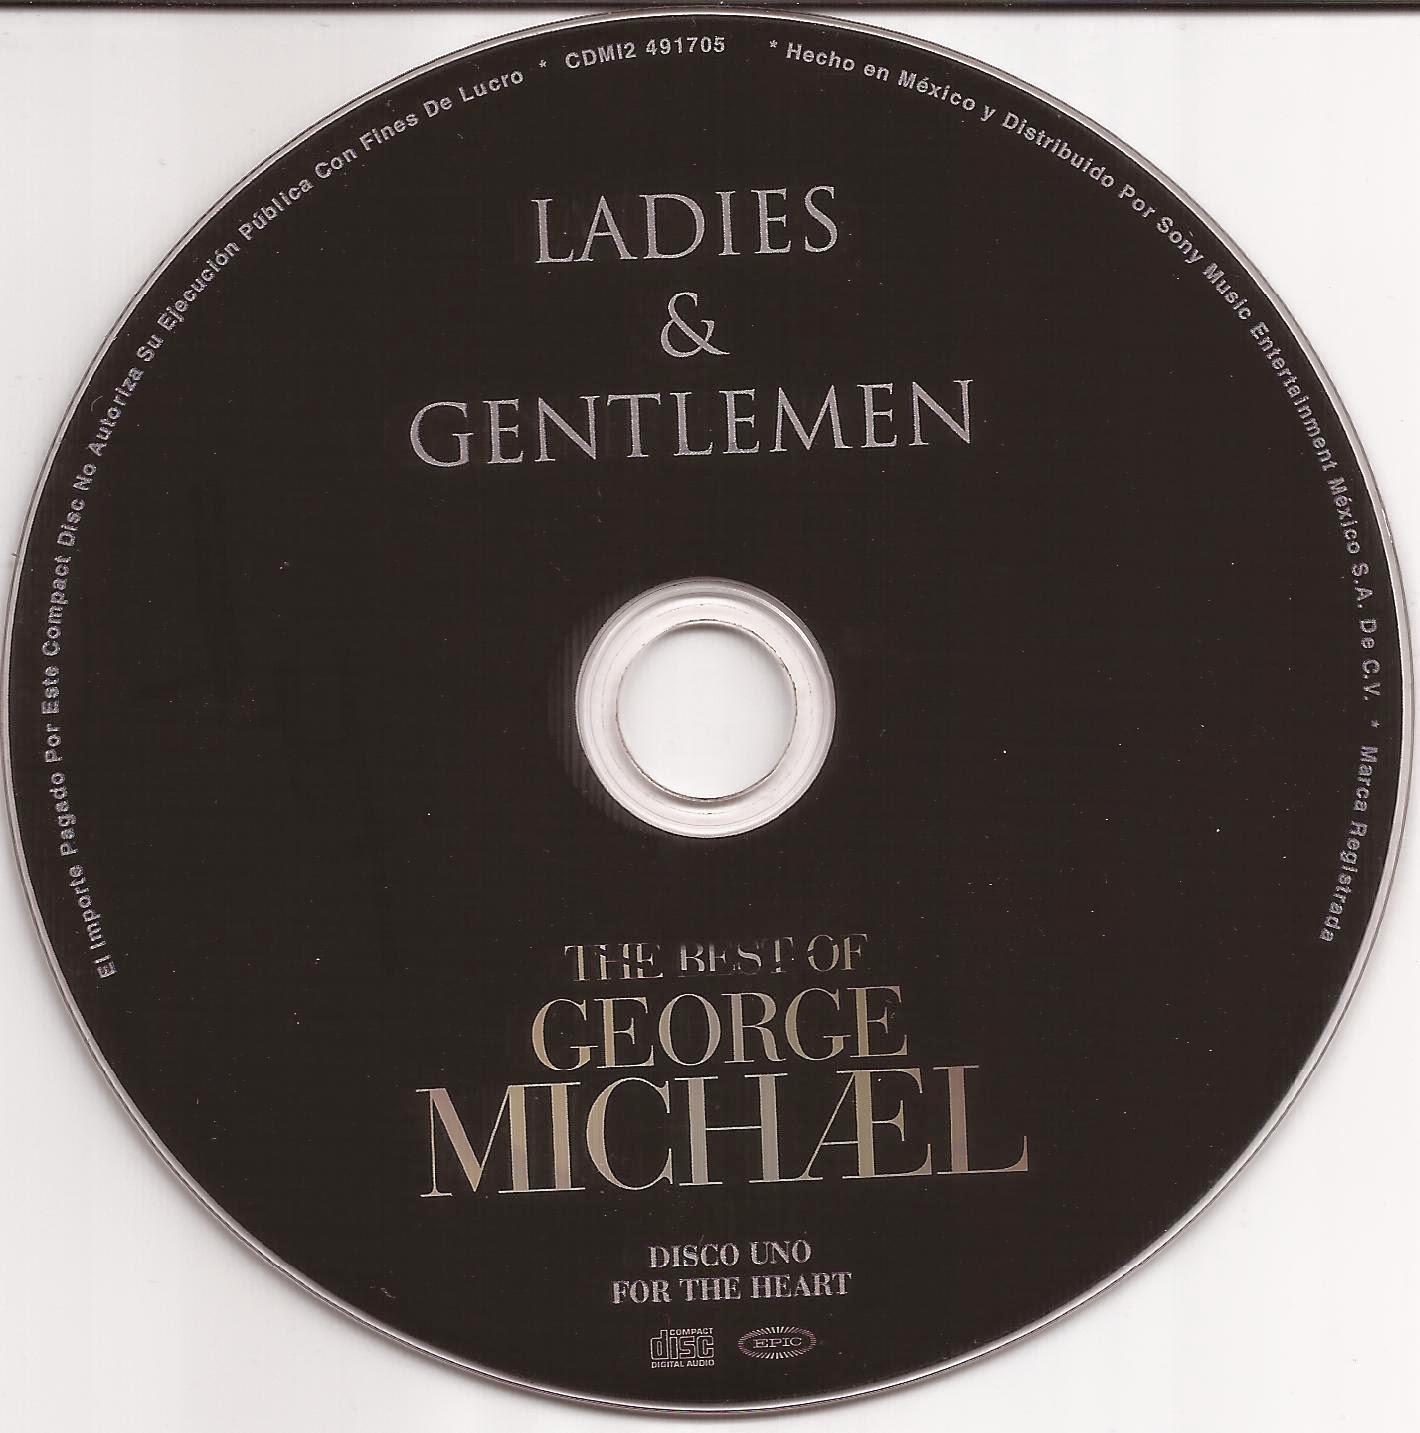 George Michael, Ladies And Gentlemen, The Best Of George Michael (Cd 2) Full Album Zip